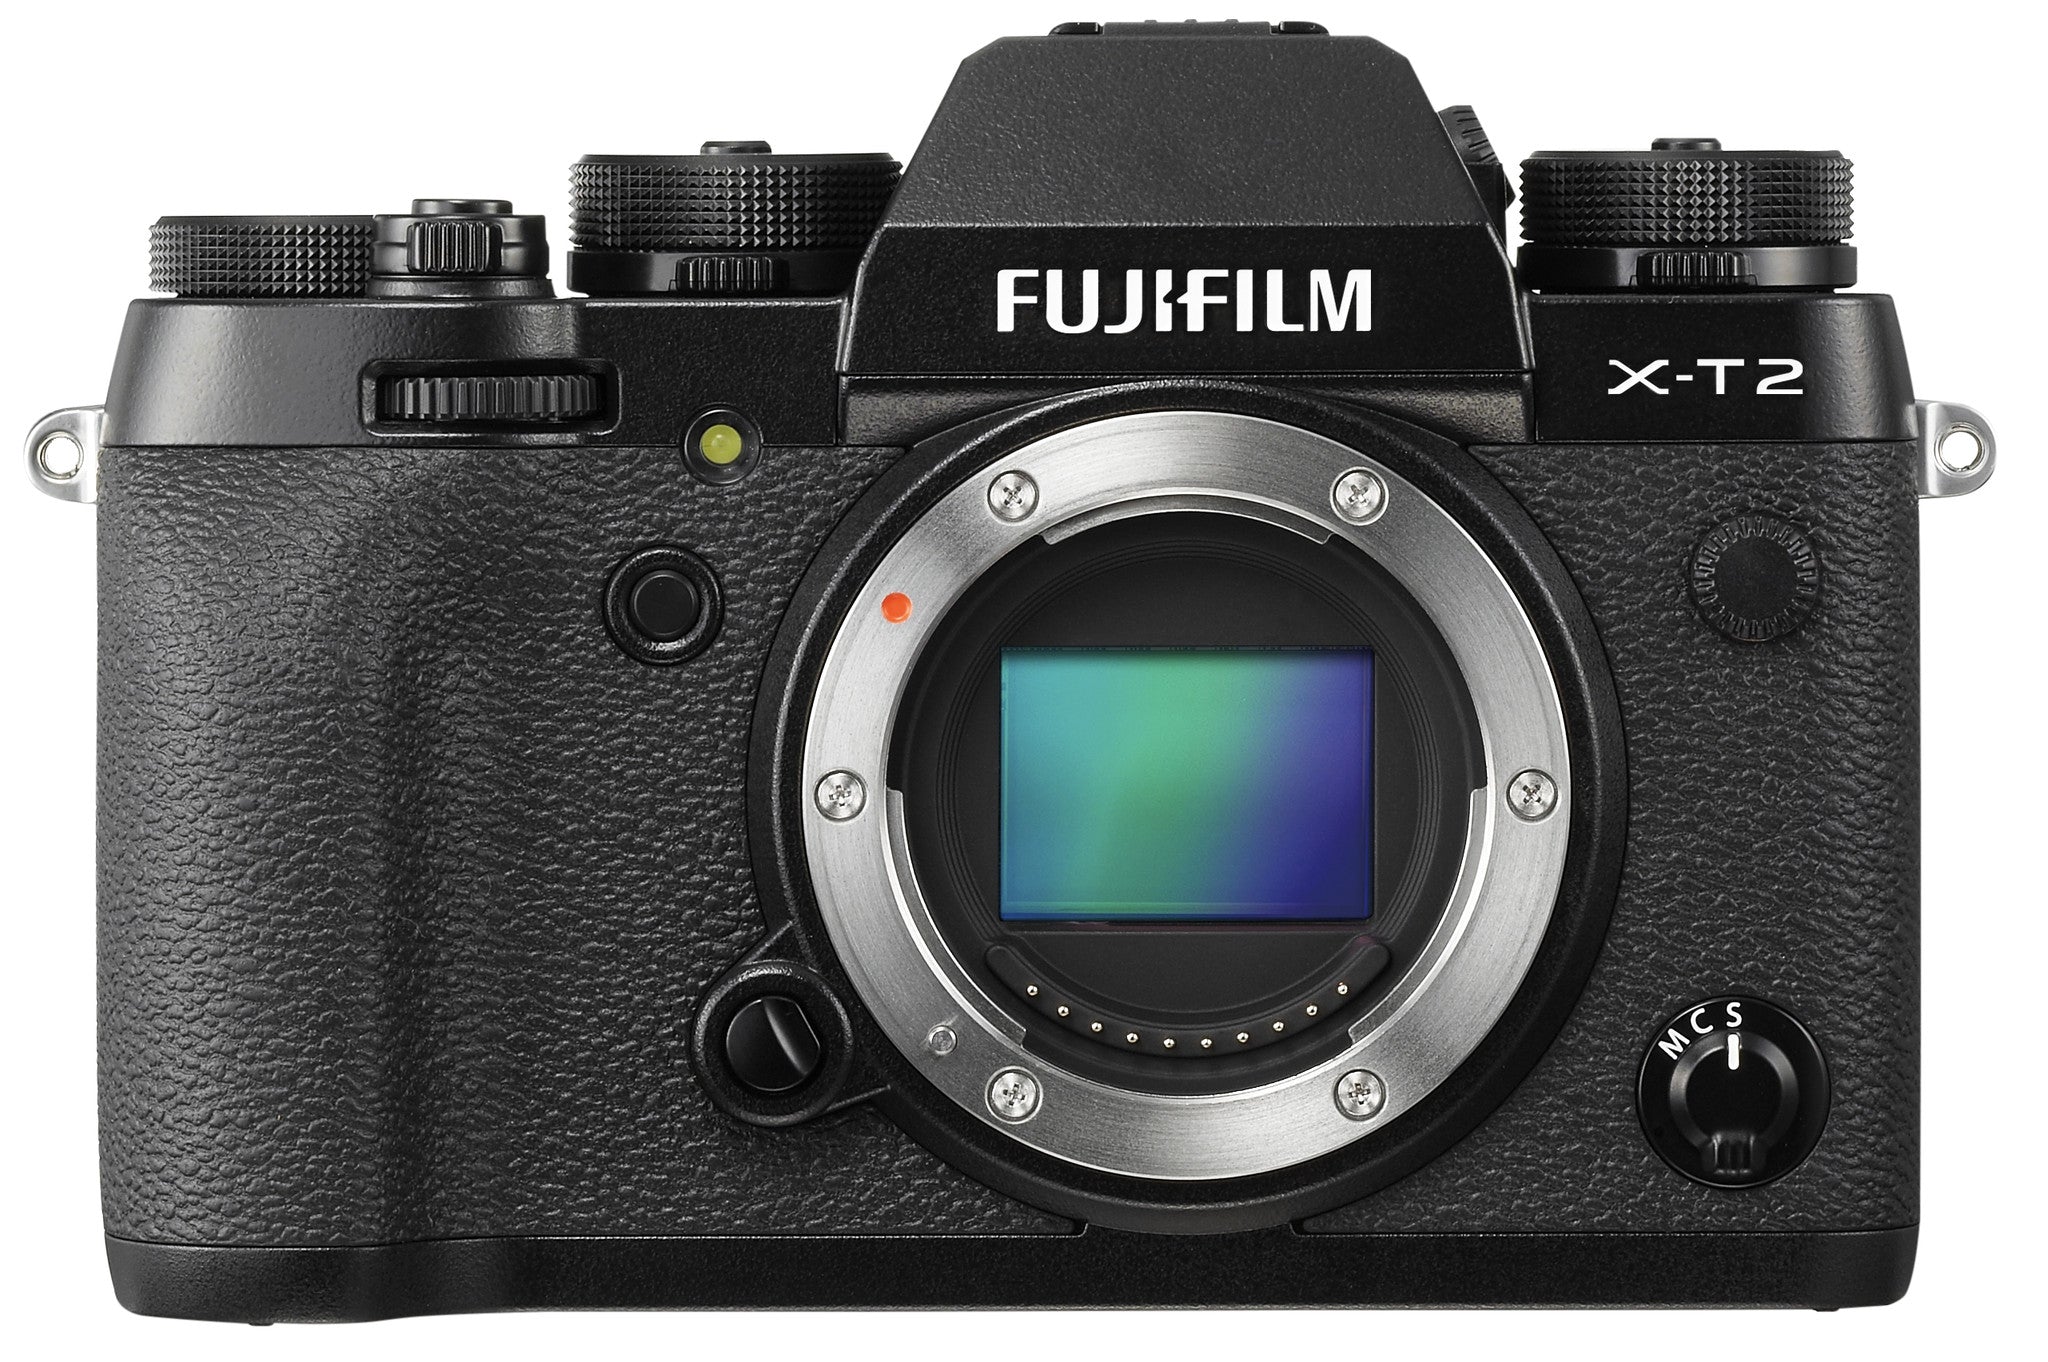 Fujifilm X-T2 Digital Camera Body (Black), camera mirrorless cameras, Fujifilm - Pictureline  - 1